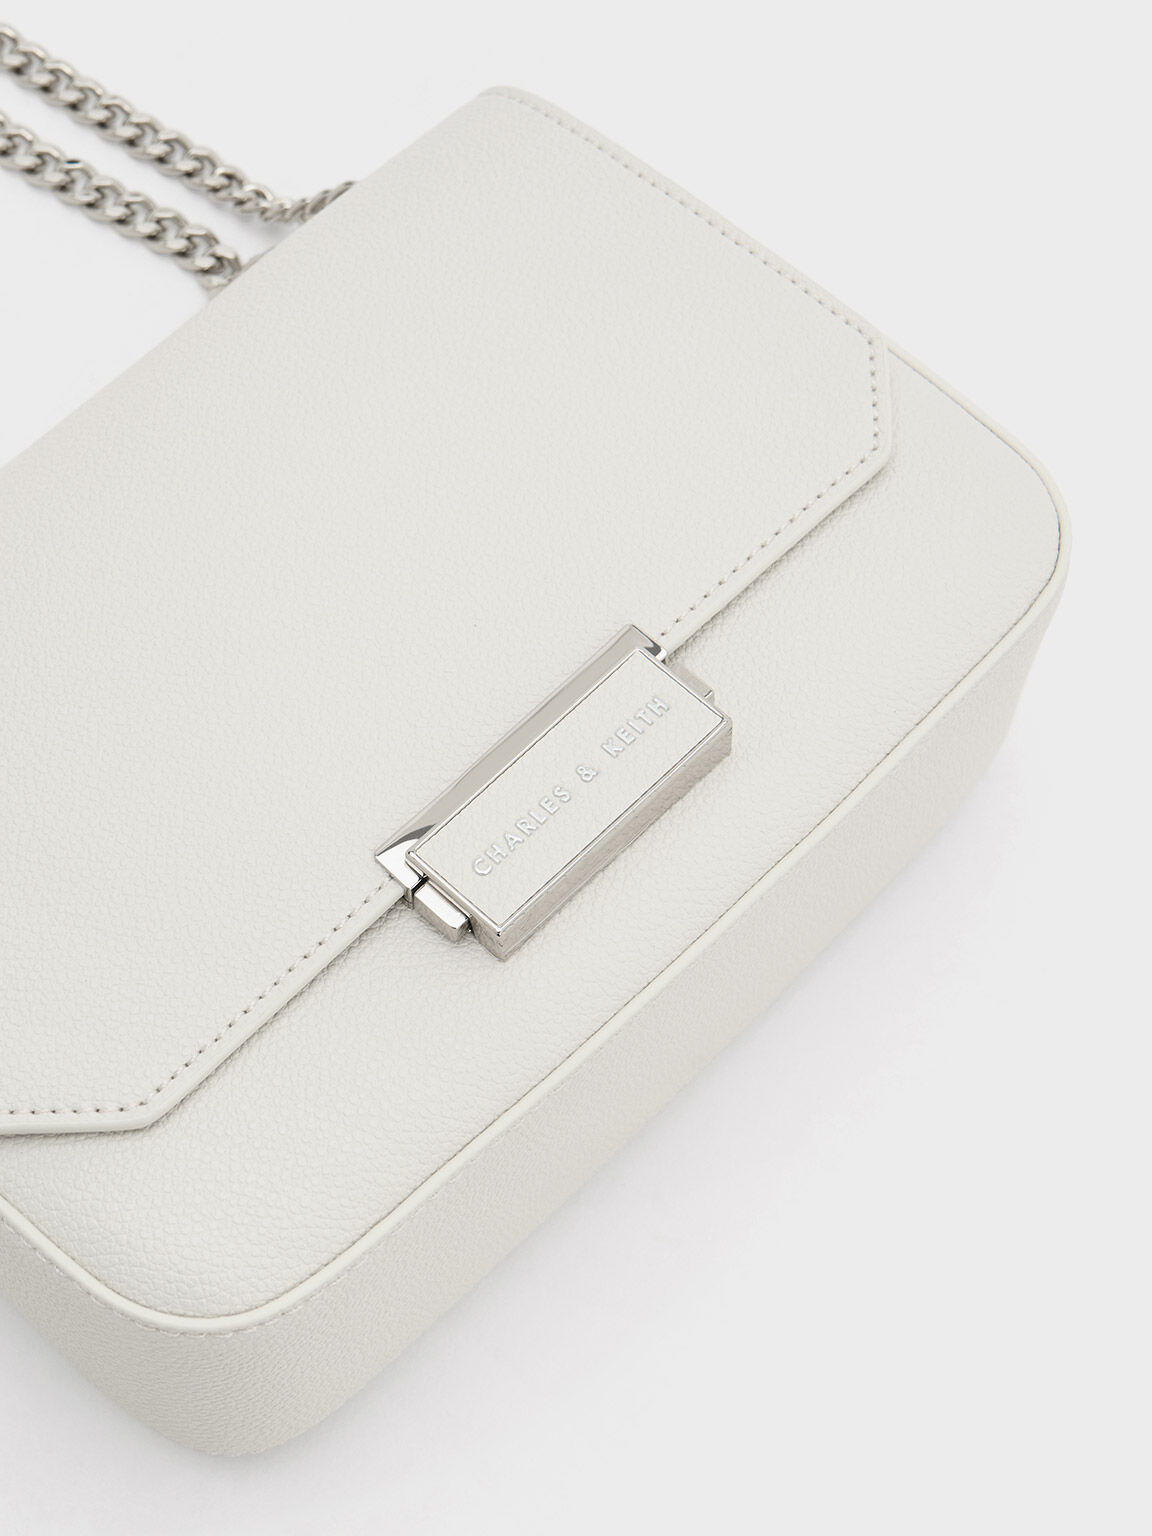 Vintage CHANEL ivory white lambskin 2.55 chain shoulder bag with gold CC  motif. | Chain shoulder bag, Vintage chanel bag, Chanel handbags